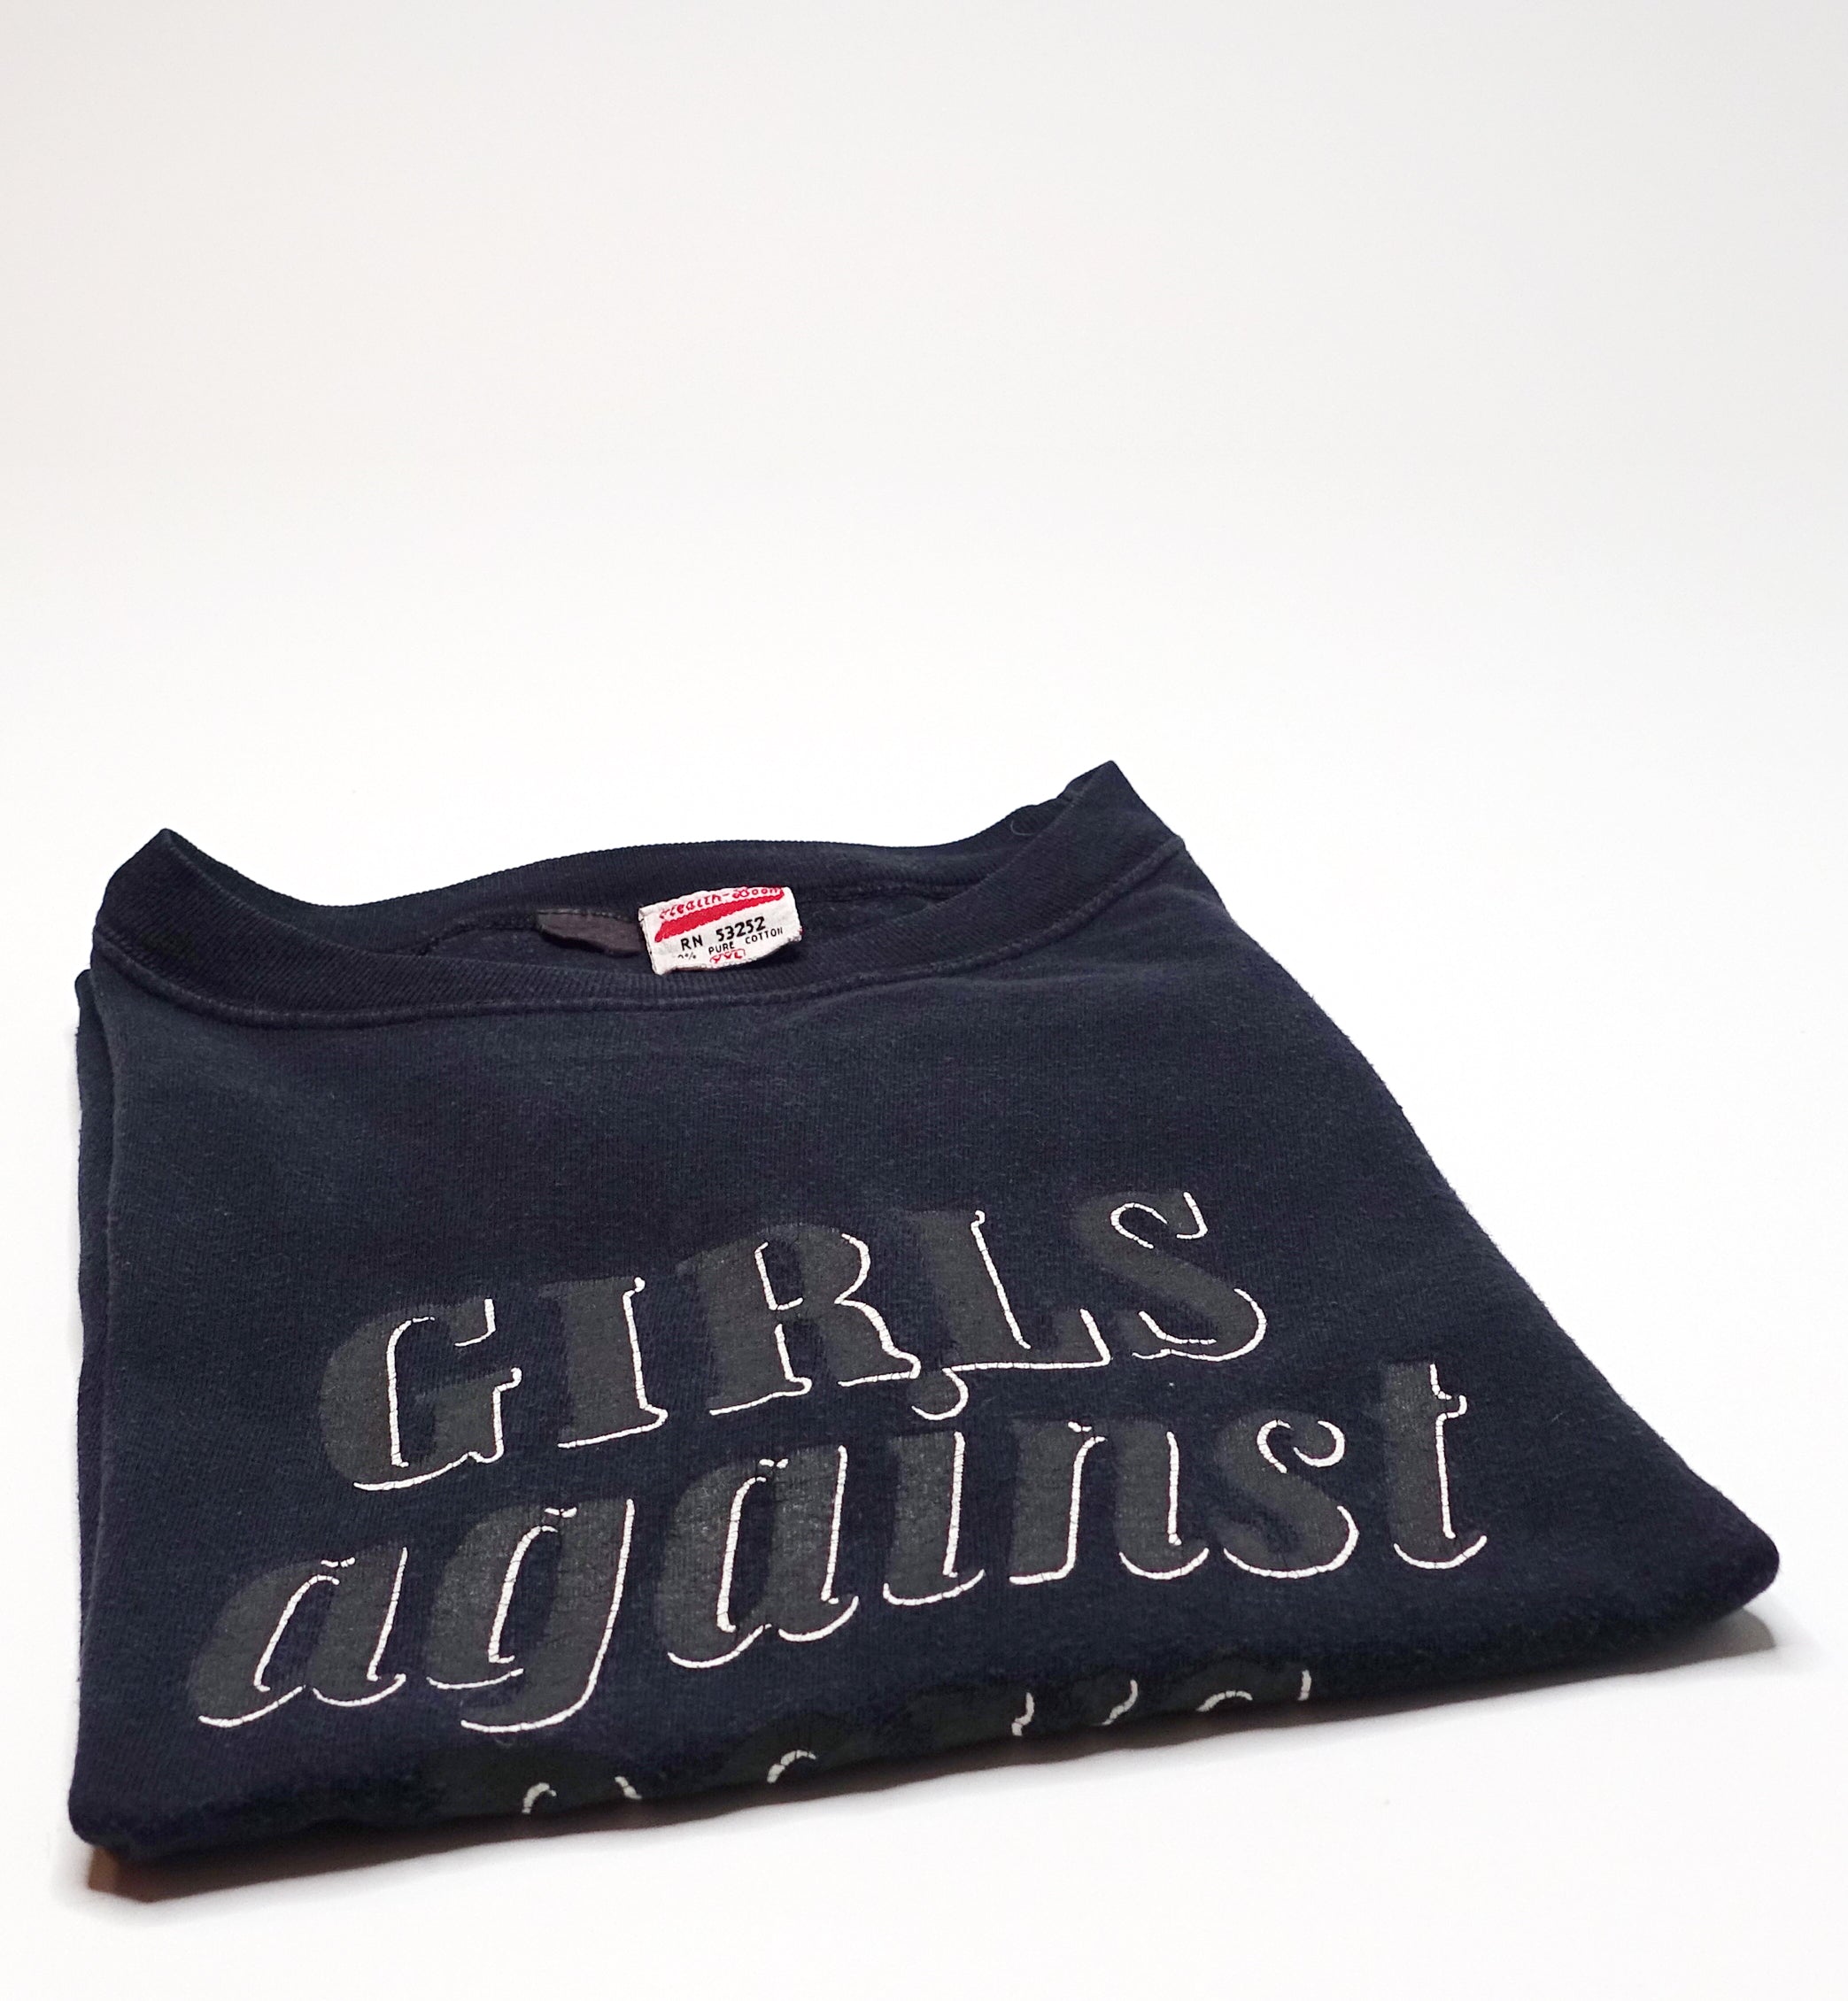 Girls Against Boys – Type Tour Shirt Size XL